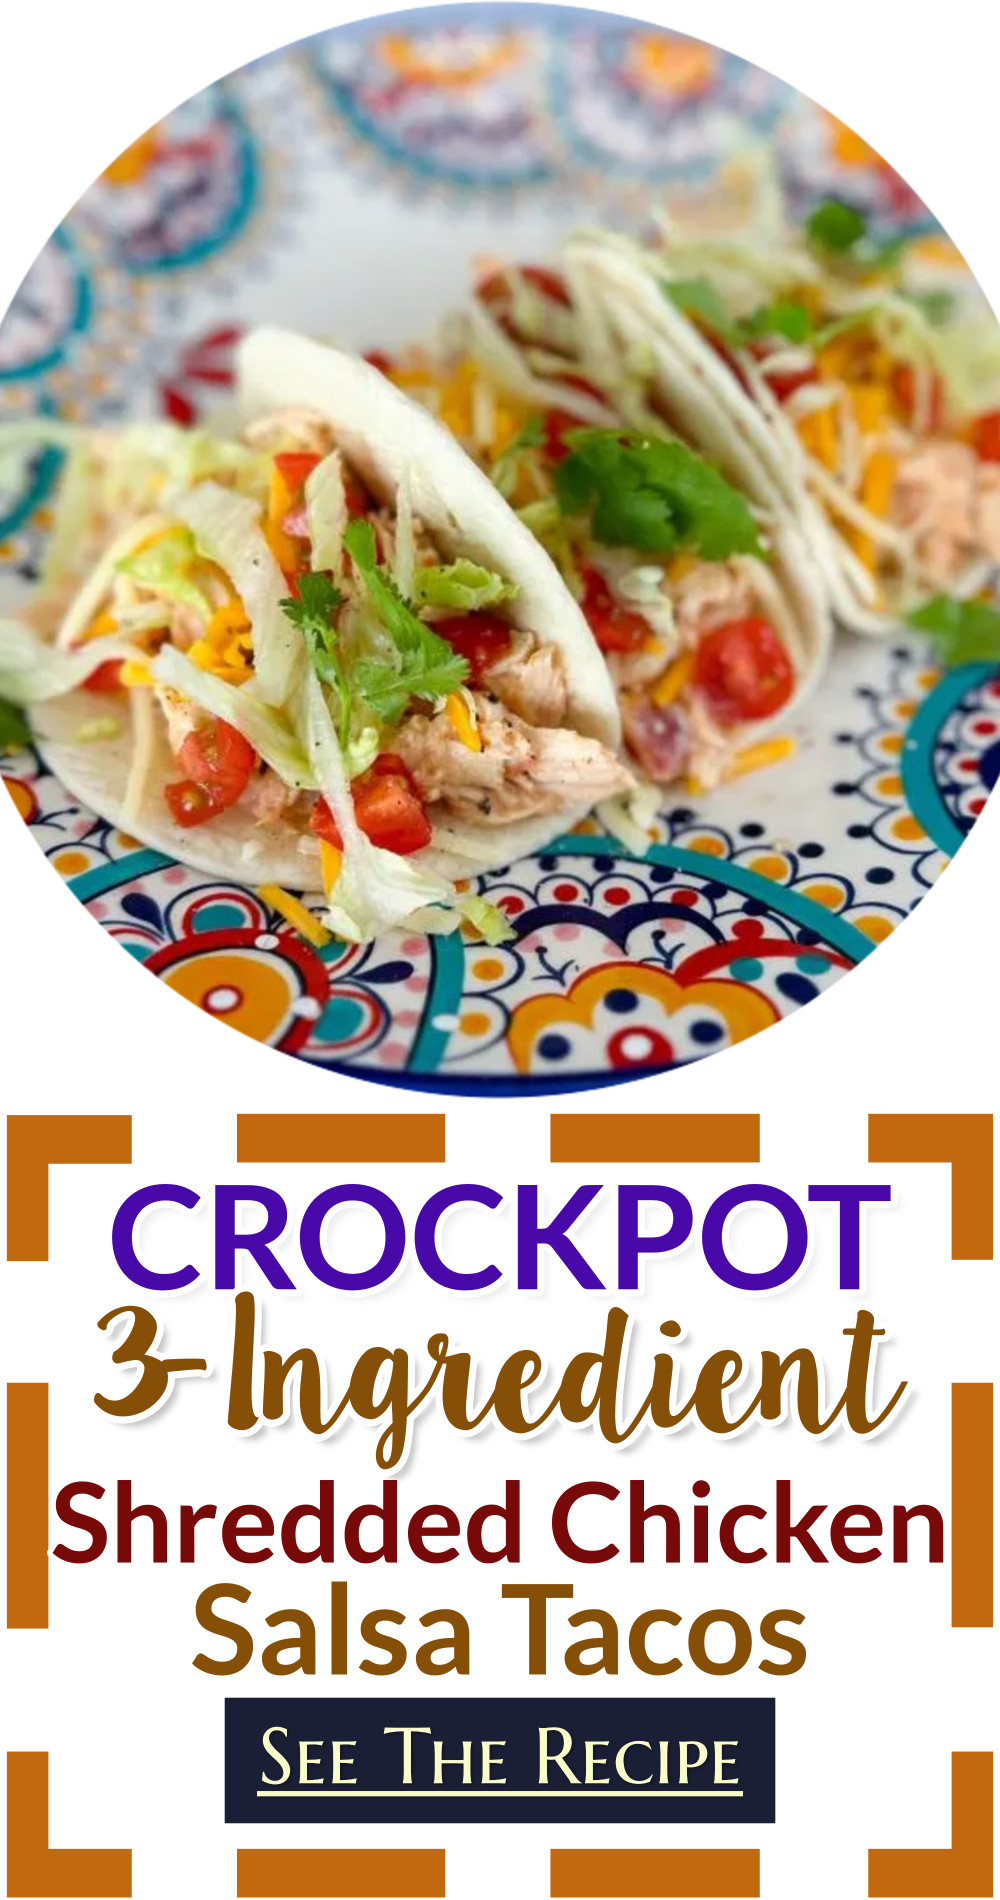 Crockpot 3-Ingredient Shredded Chicken Salsa Tacos Recipe